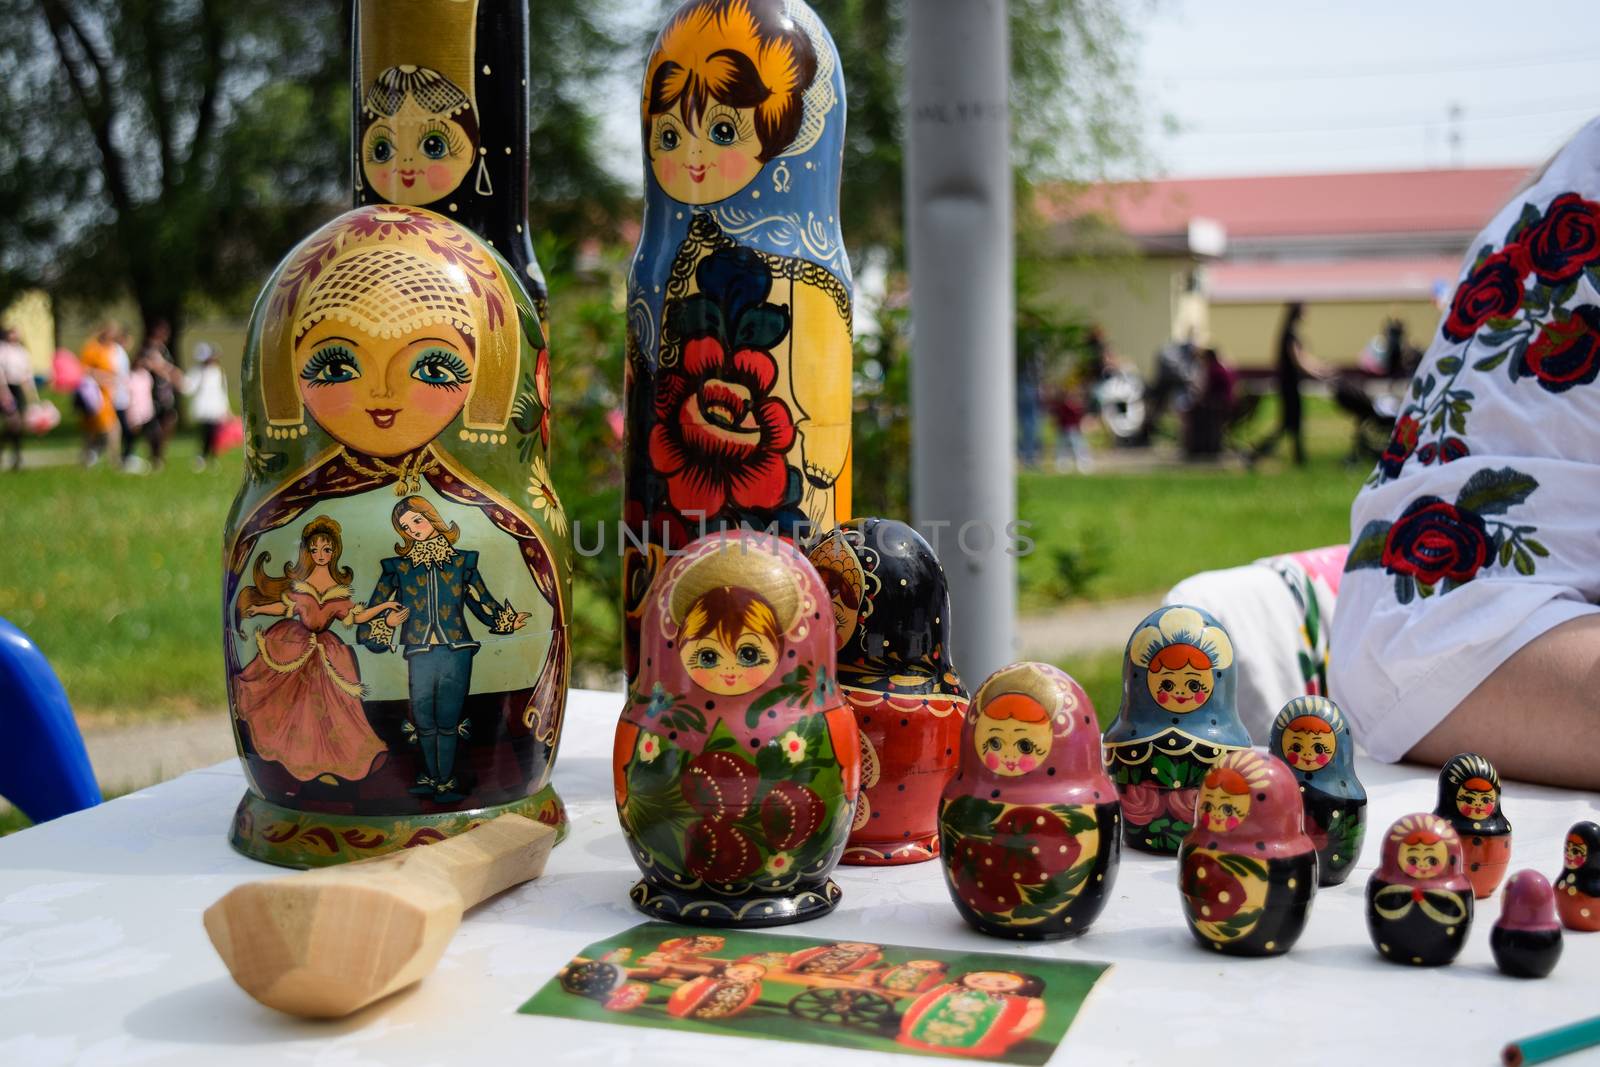 The matryoshkas are on the table. National Russian art painted matryoshkas.